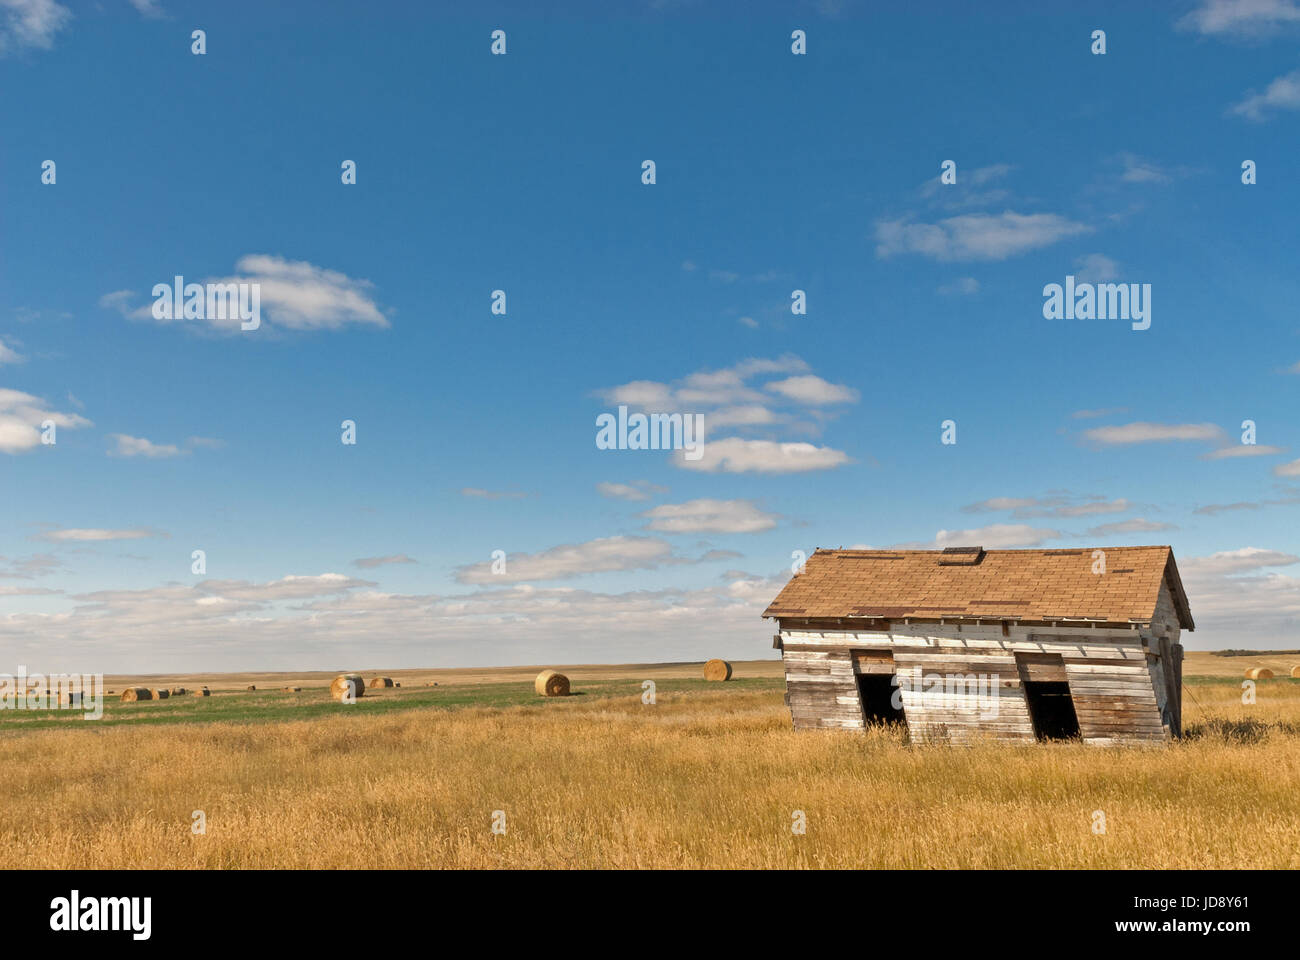 Abandoned shack in prairie field Stock Photo